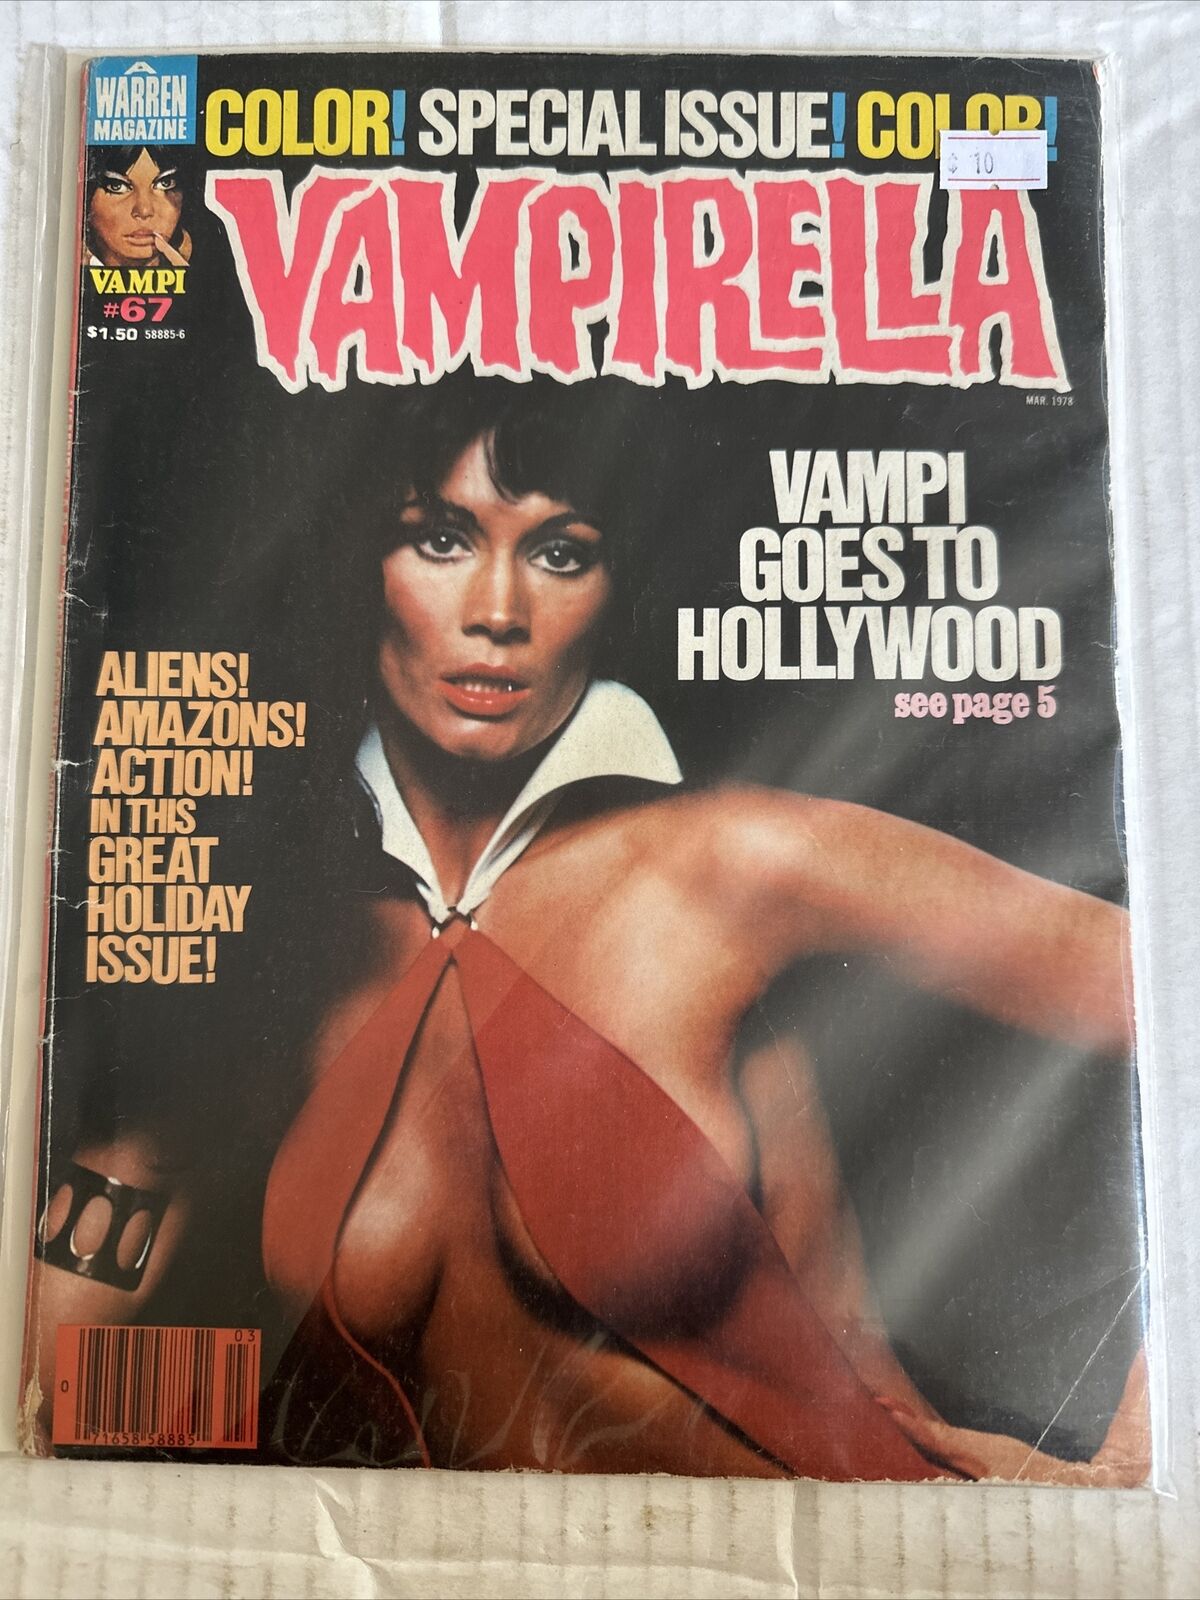 Vampirella #67 (Warren Publishing, March 1978, magazine) Vampi Goes to Hollywood